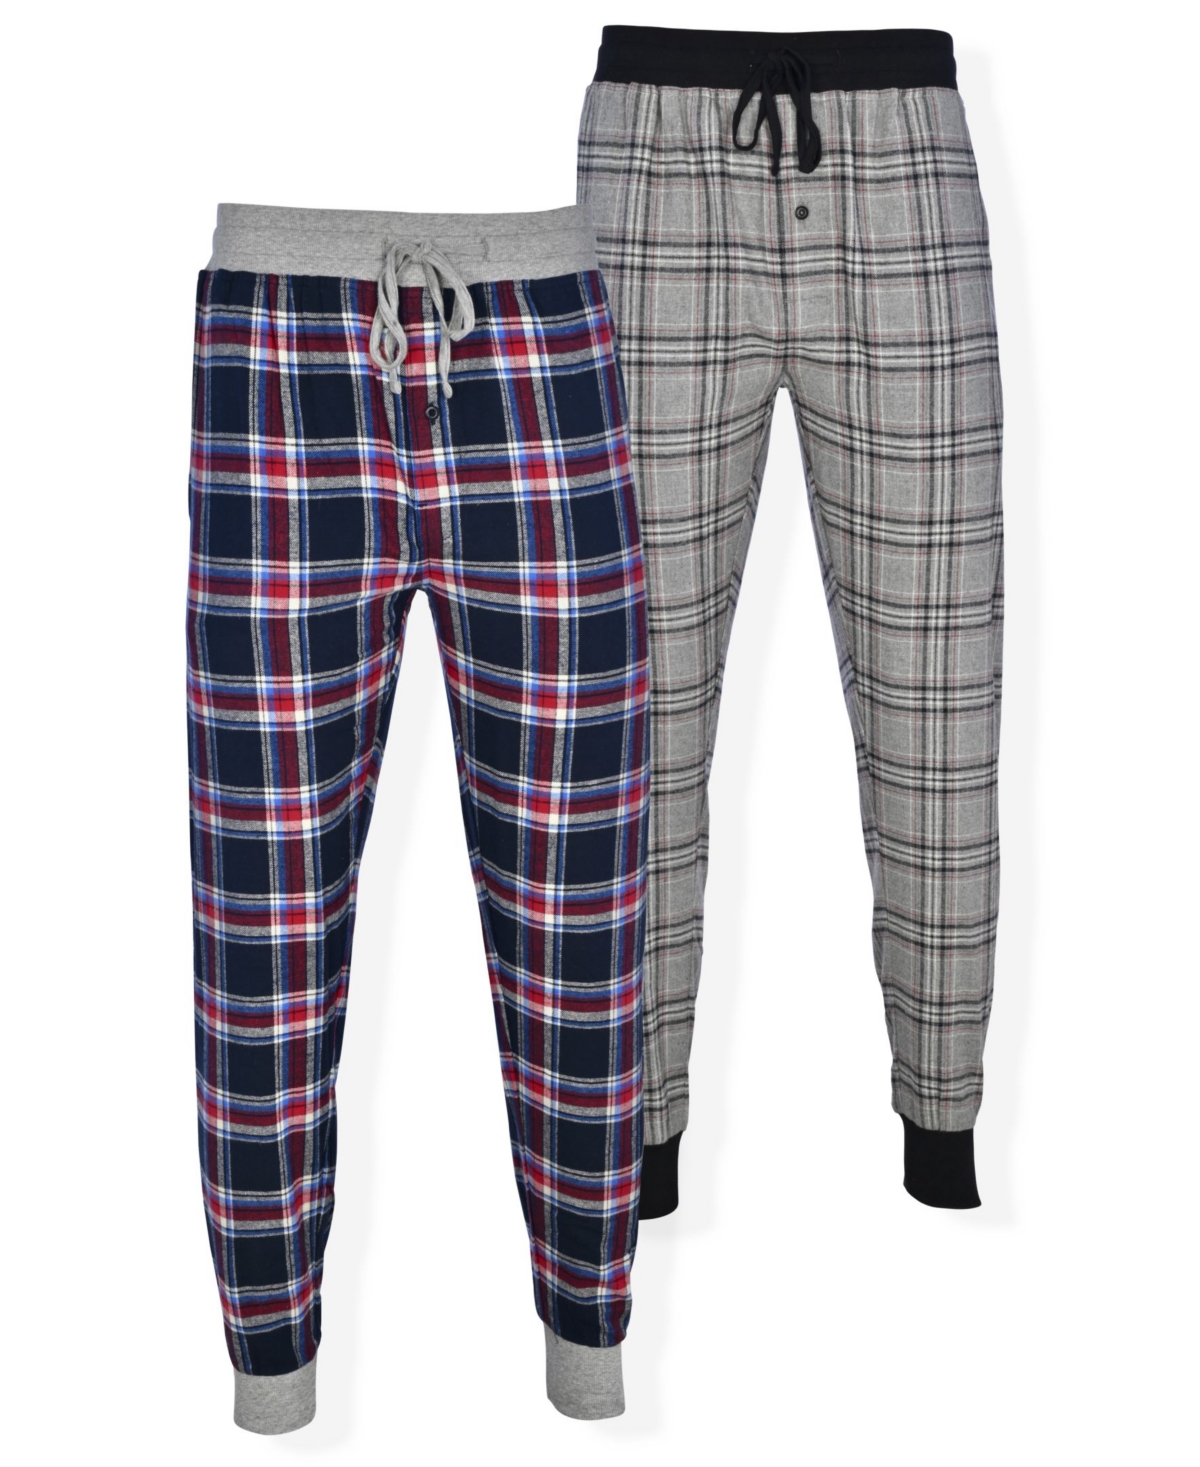 Hanes Men's Flannel Sleep Jogger Pants - 2 pack